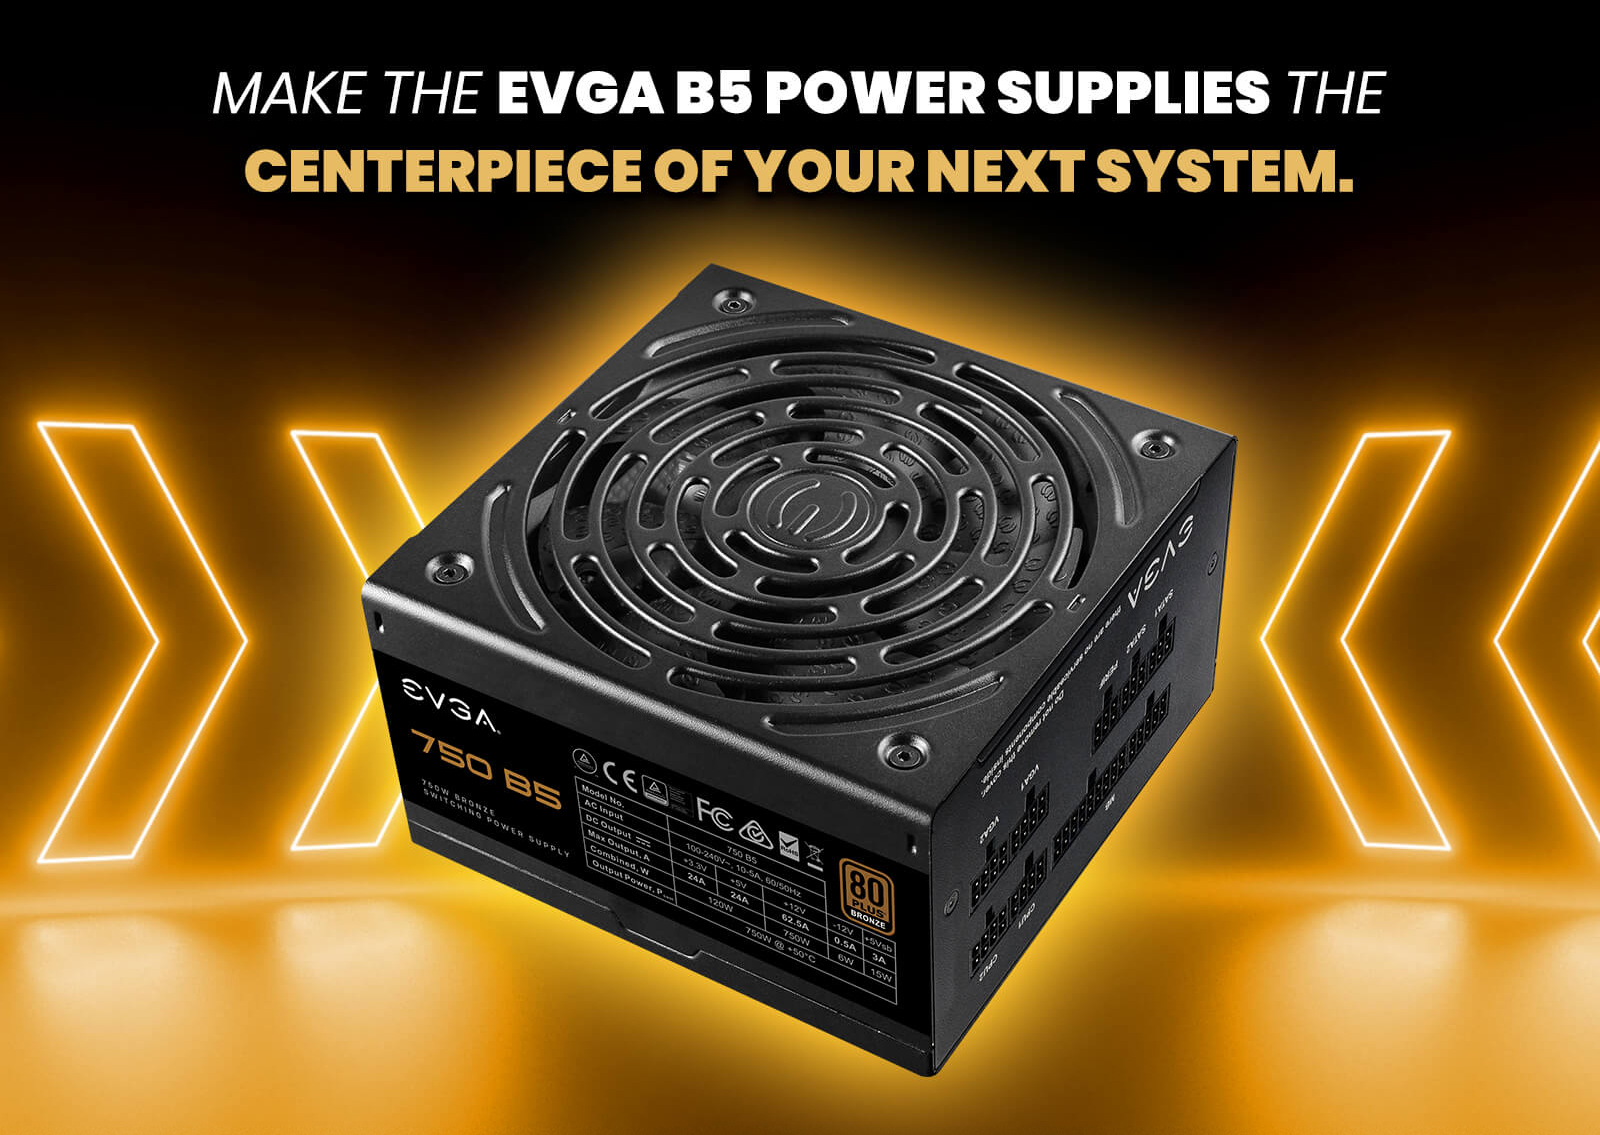 EVGA B5 750W Power Supplies facing forward